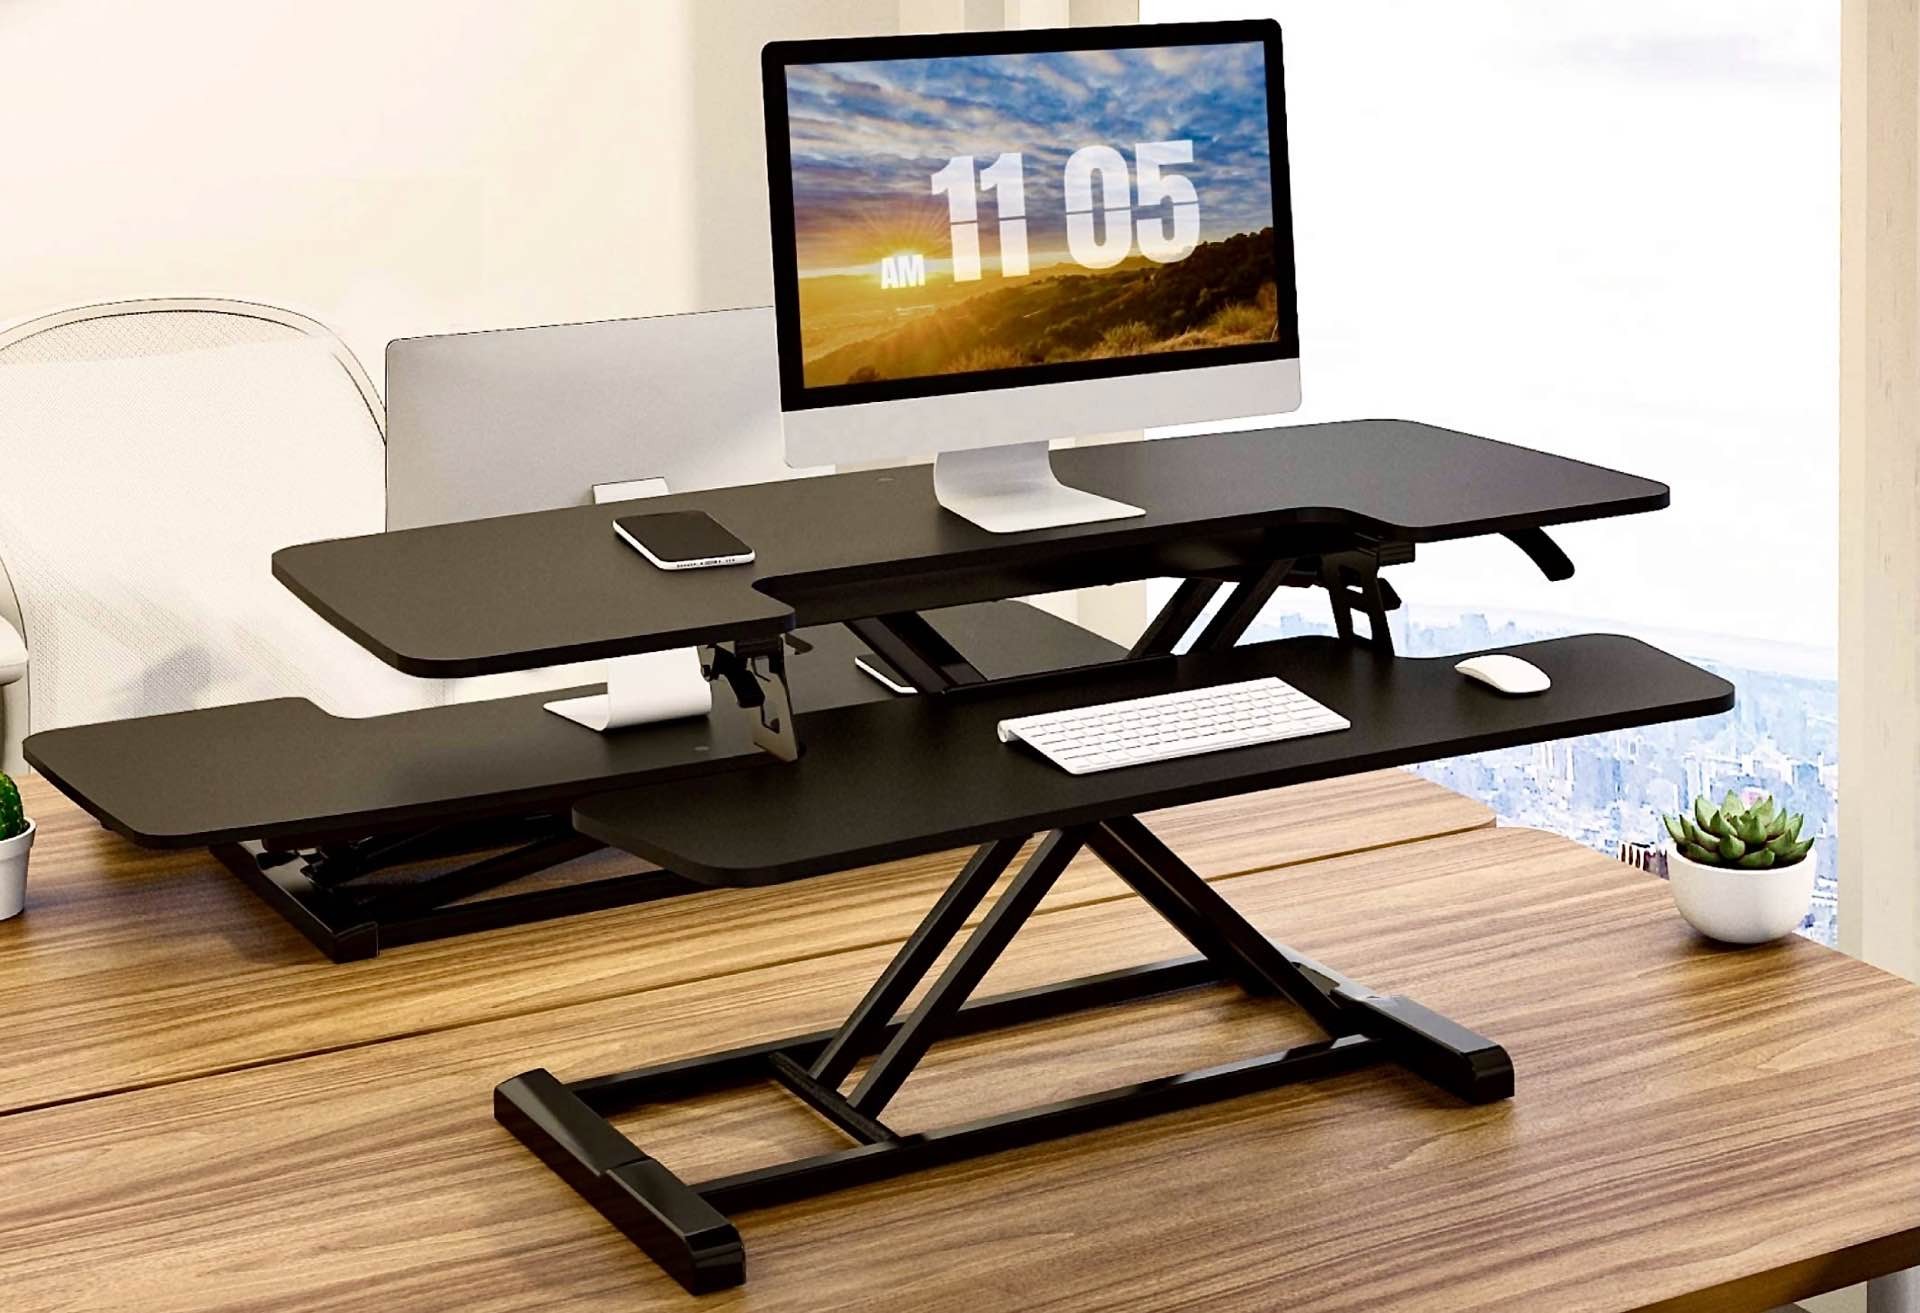 FLEXISPOT standing desk converter. ($140)